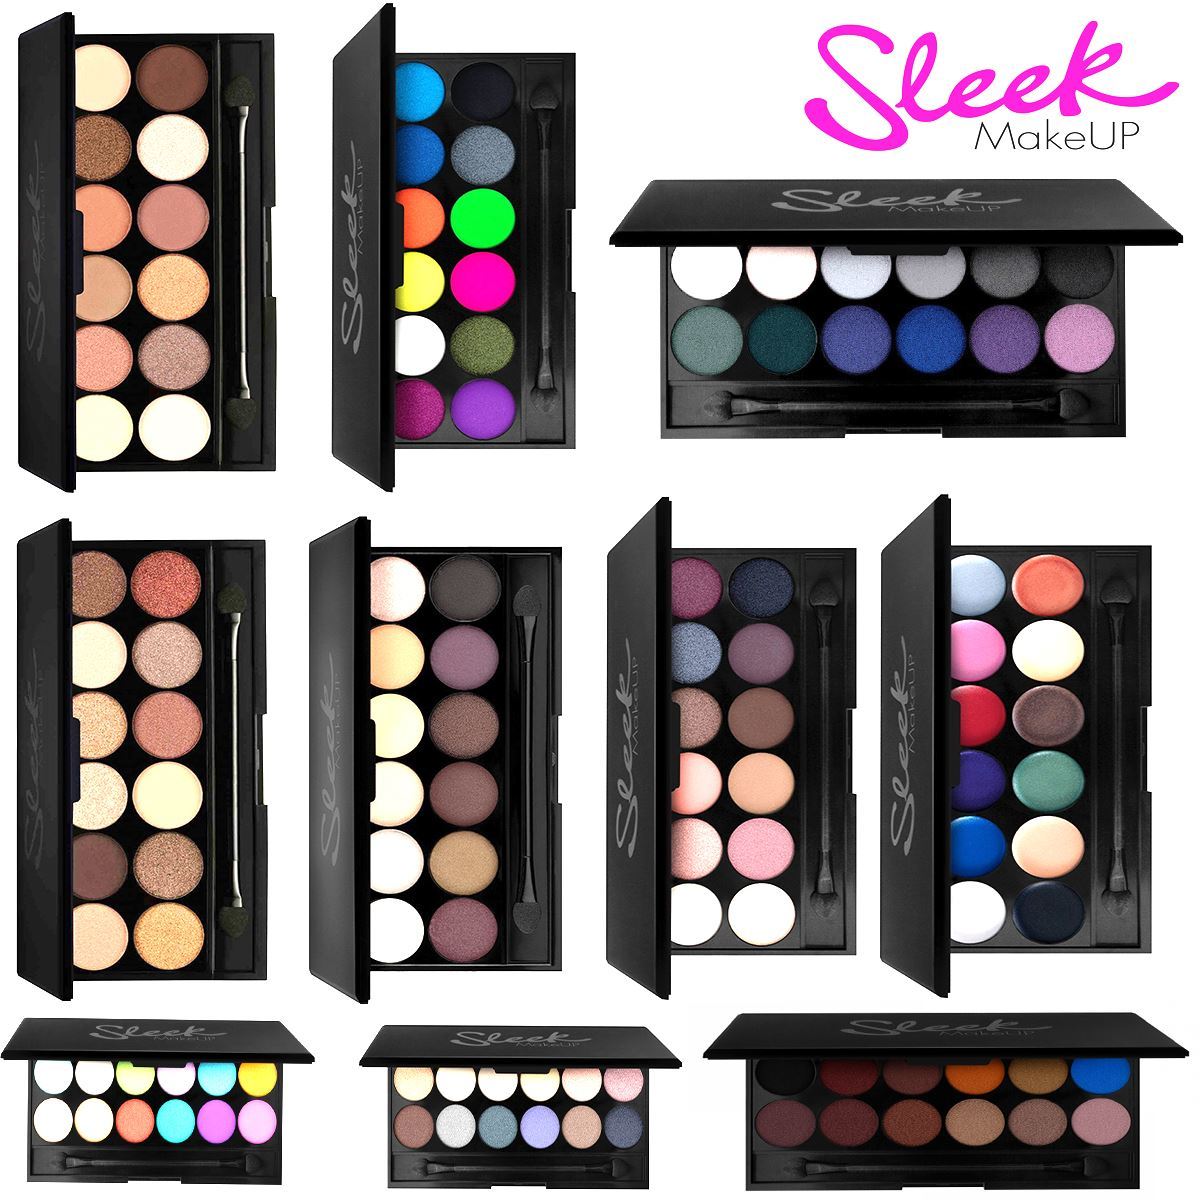 Sleek I-Divine Eyeshadow Palette 9g